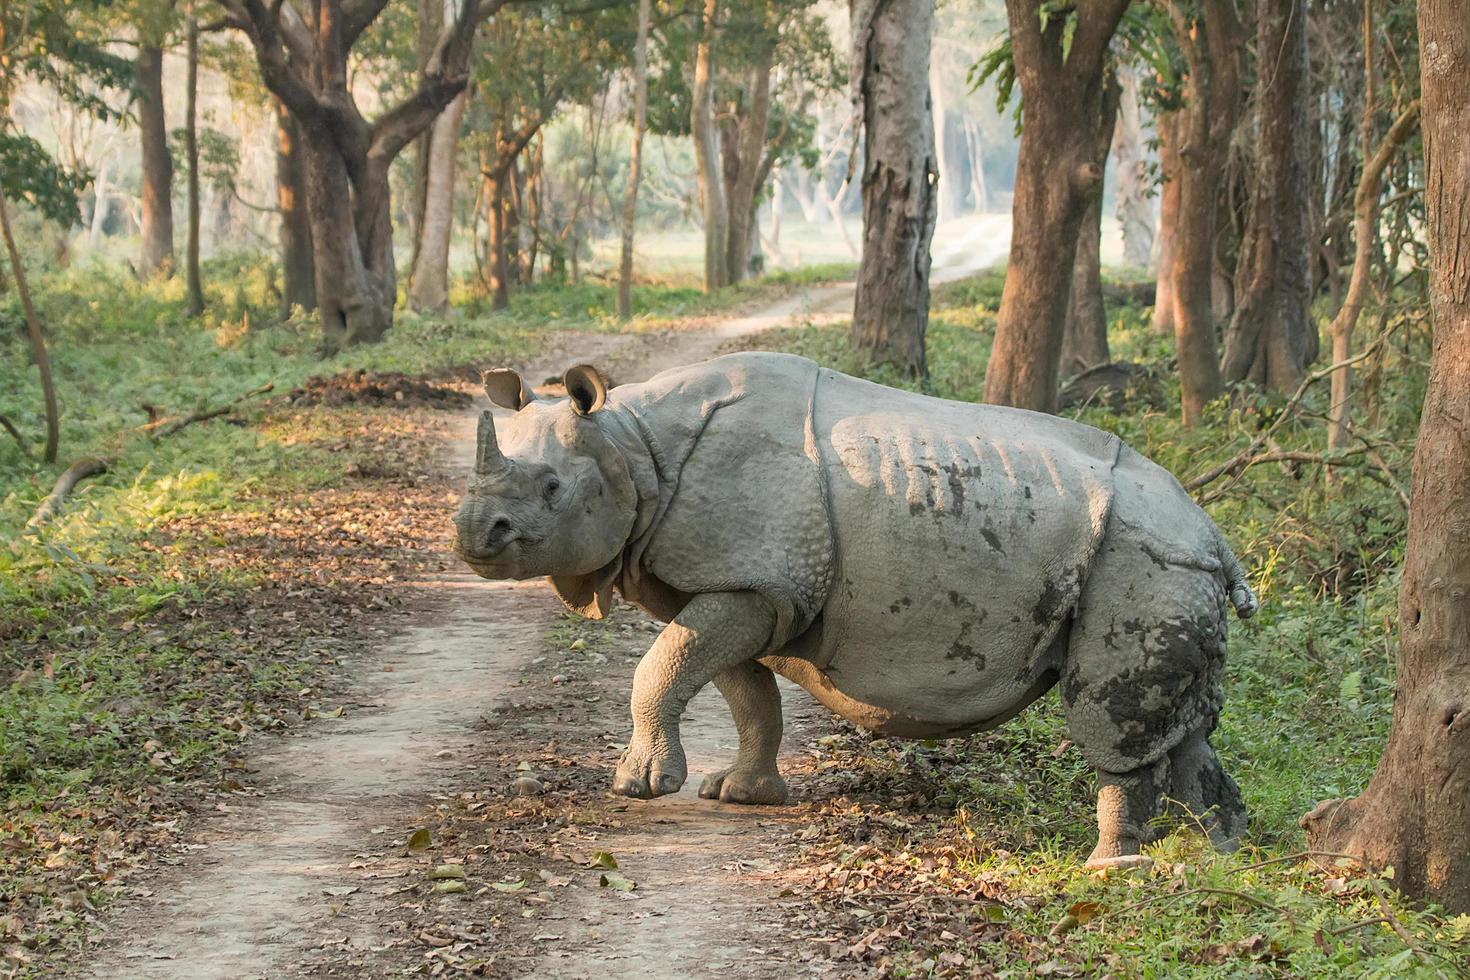 Rhino at walking across a road photo